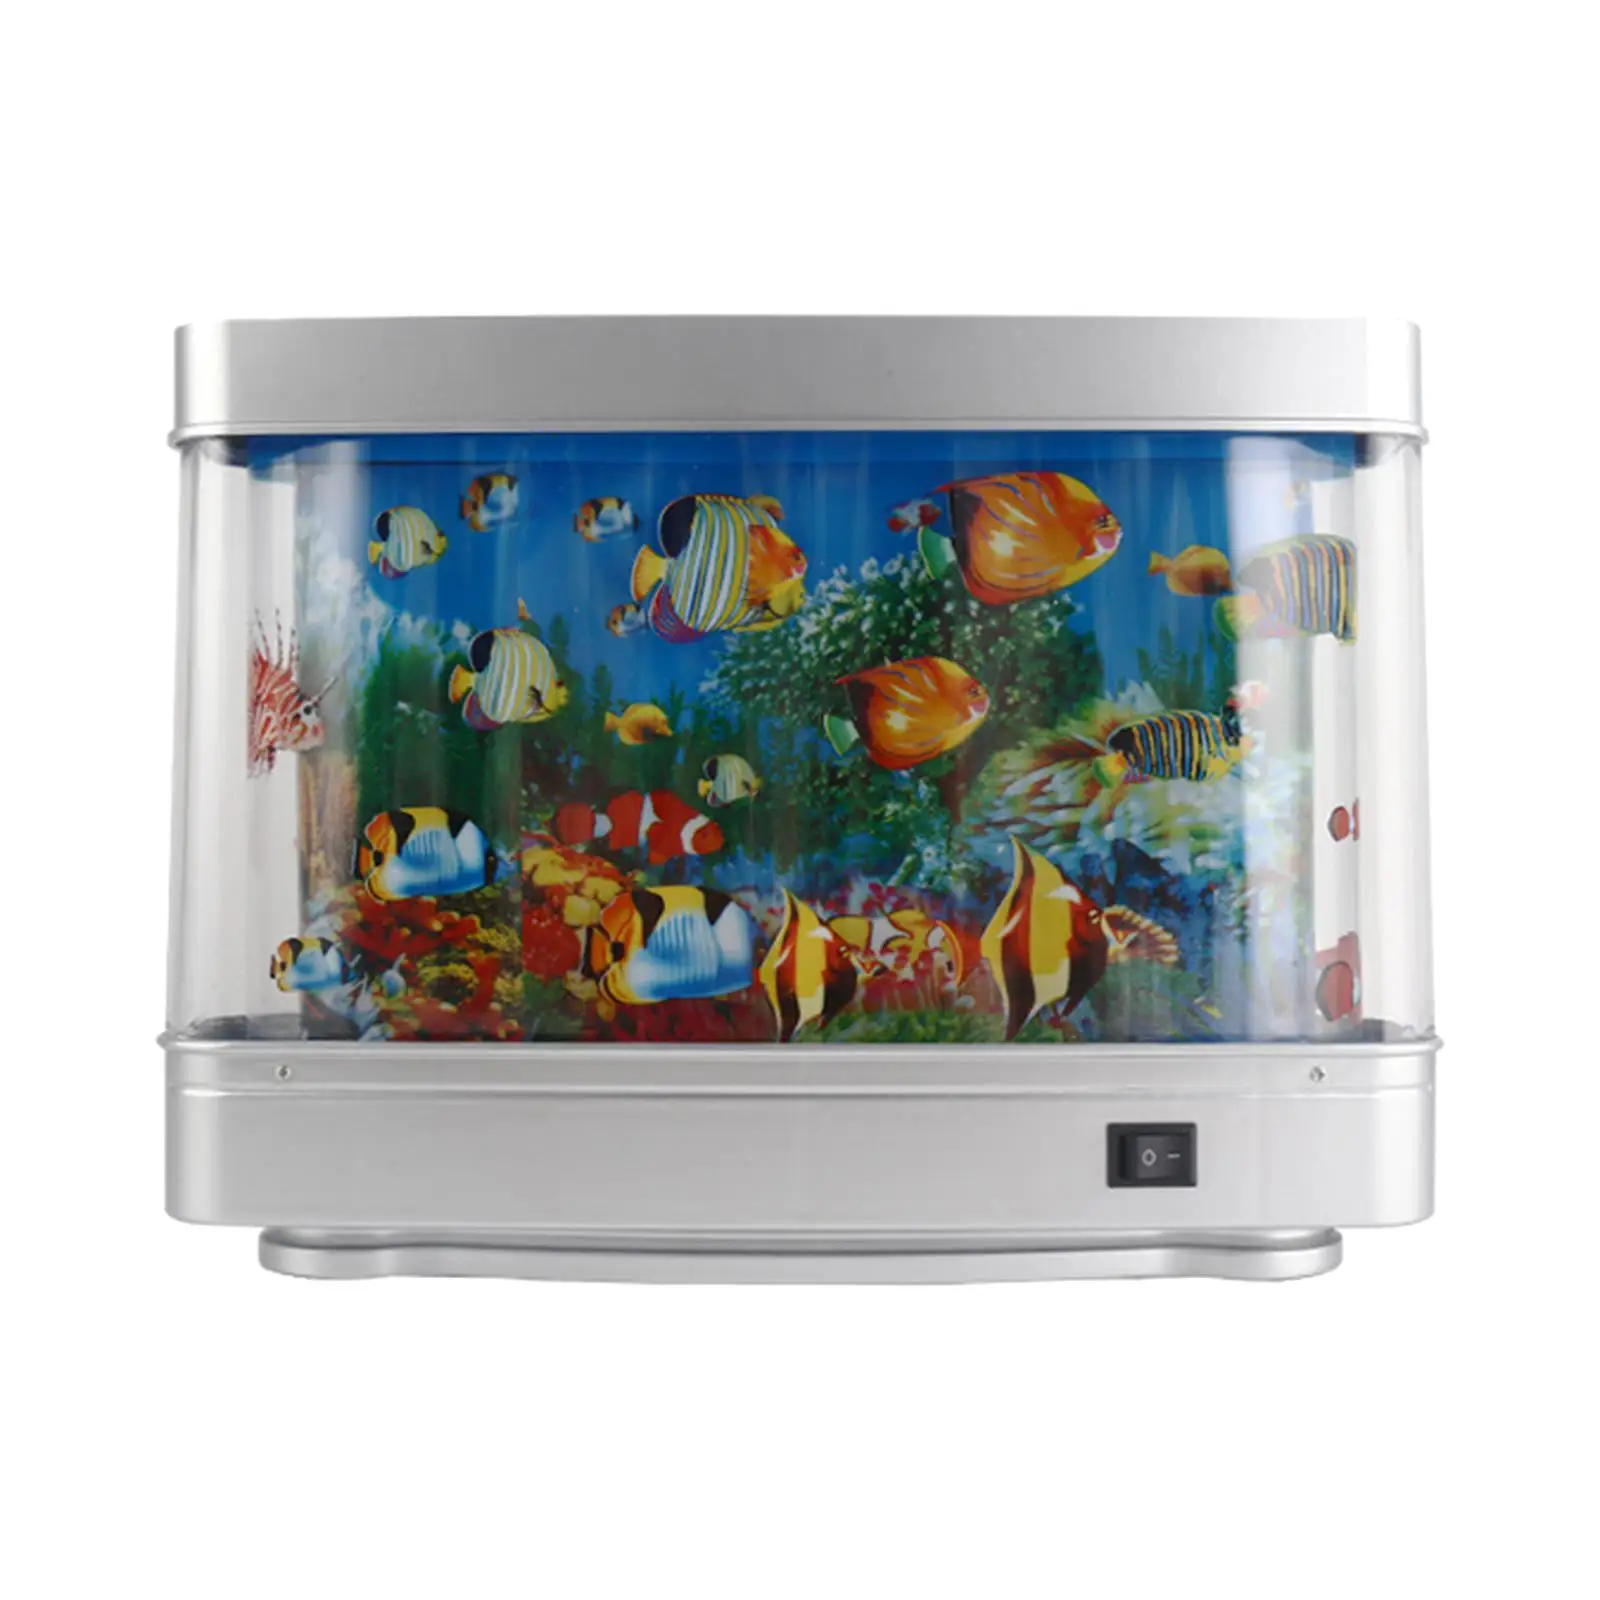 Aquarium Mood Lamp Night Light Views Moving Artificial Tropical Landscape for Holidays Bedroom Birthdays Office Indoor